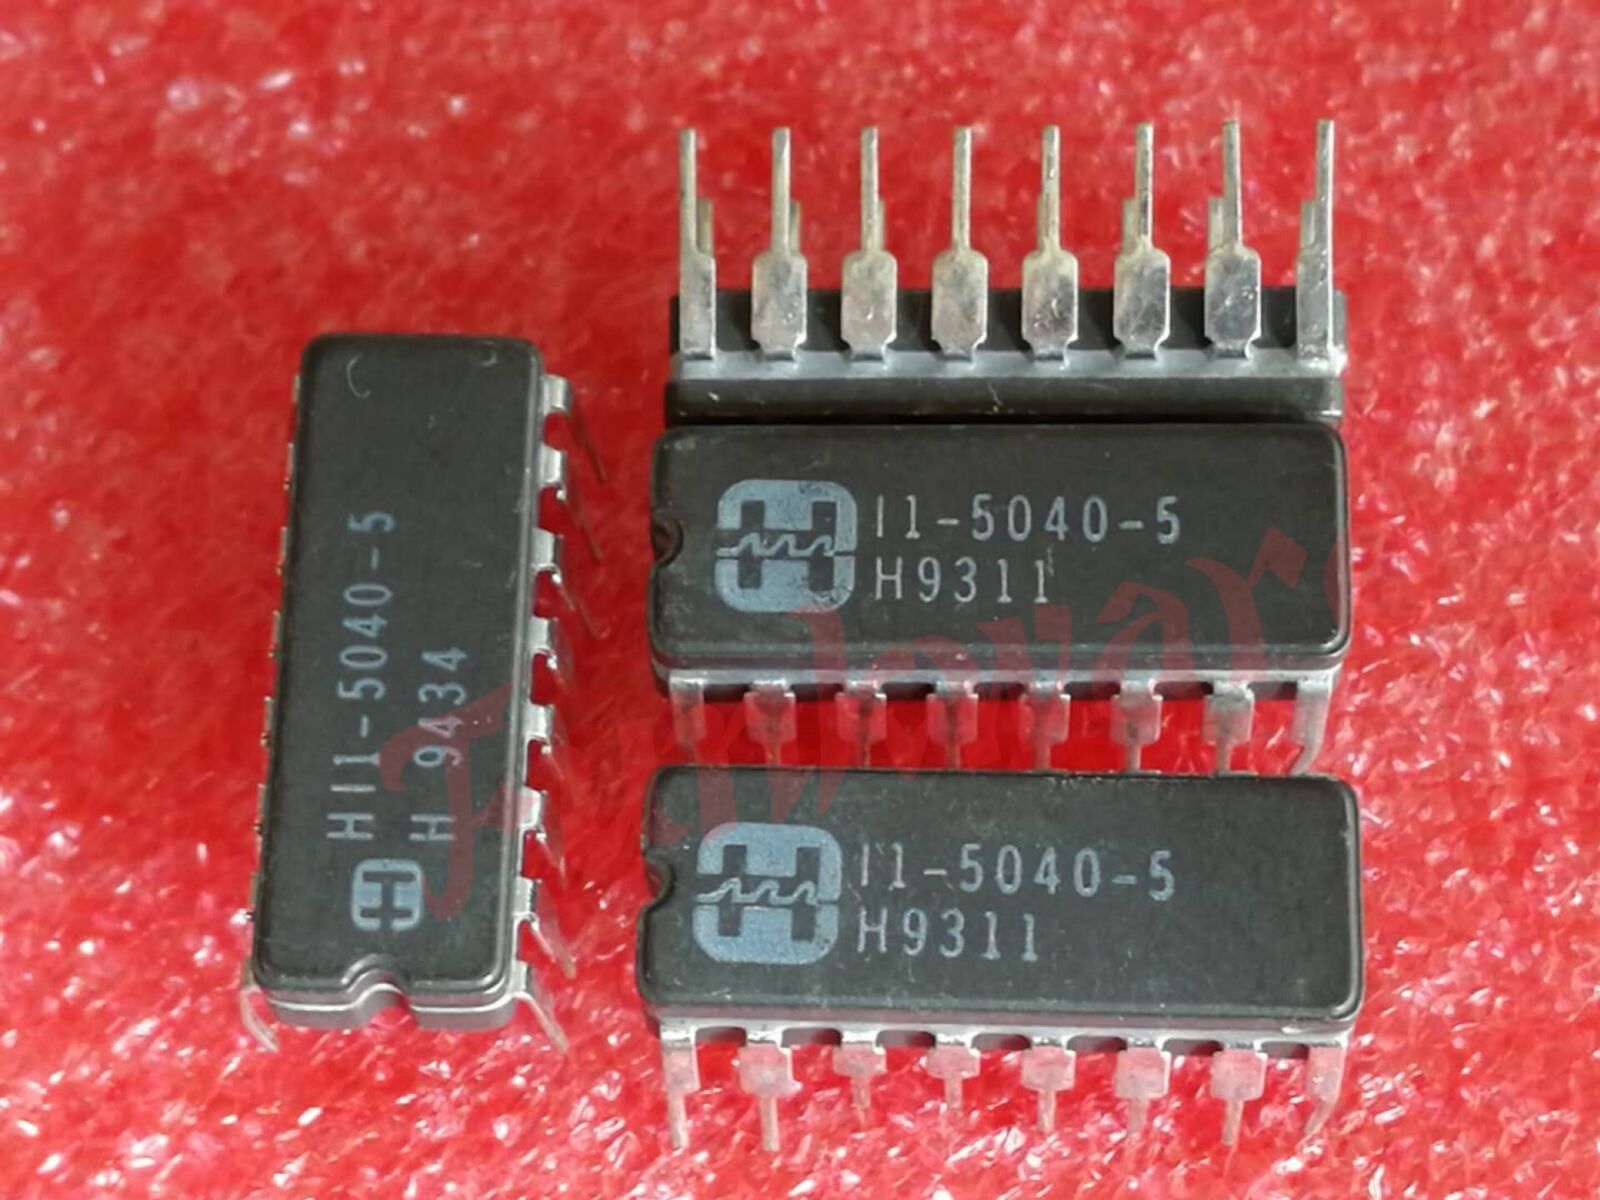 New HI1-5040-5 I1-5040-5 Harris Semiconductor DIP16 x1PC